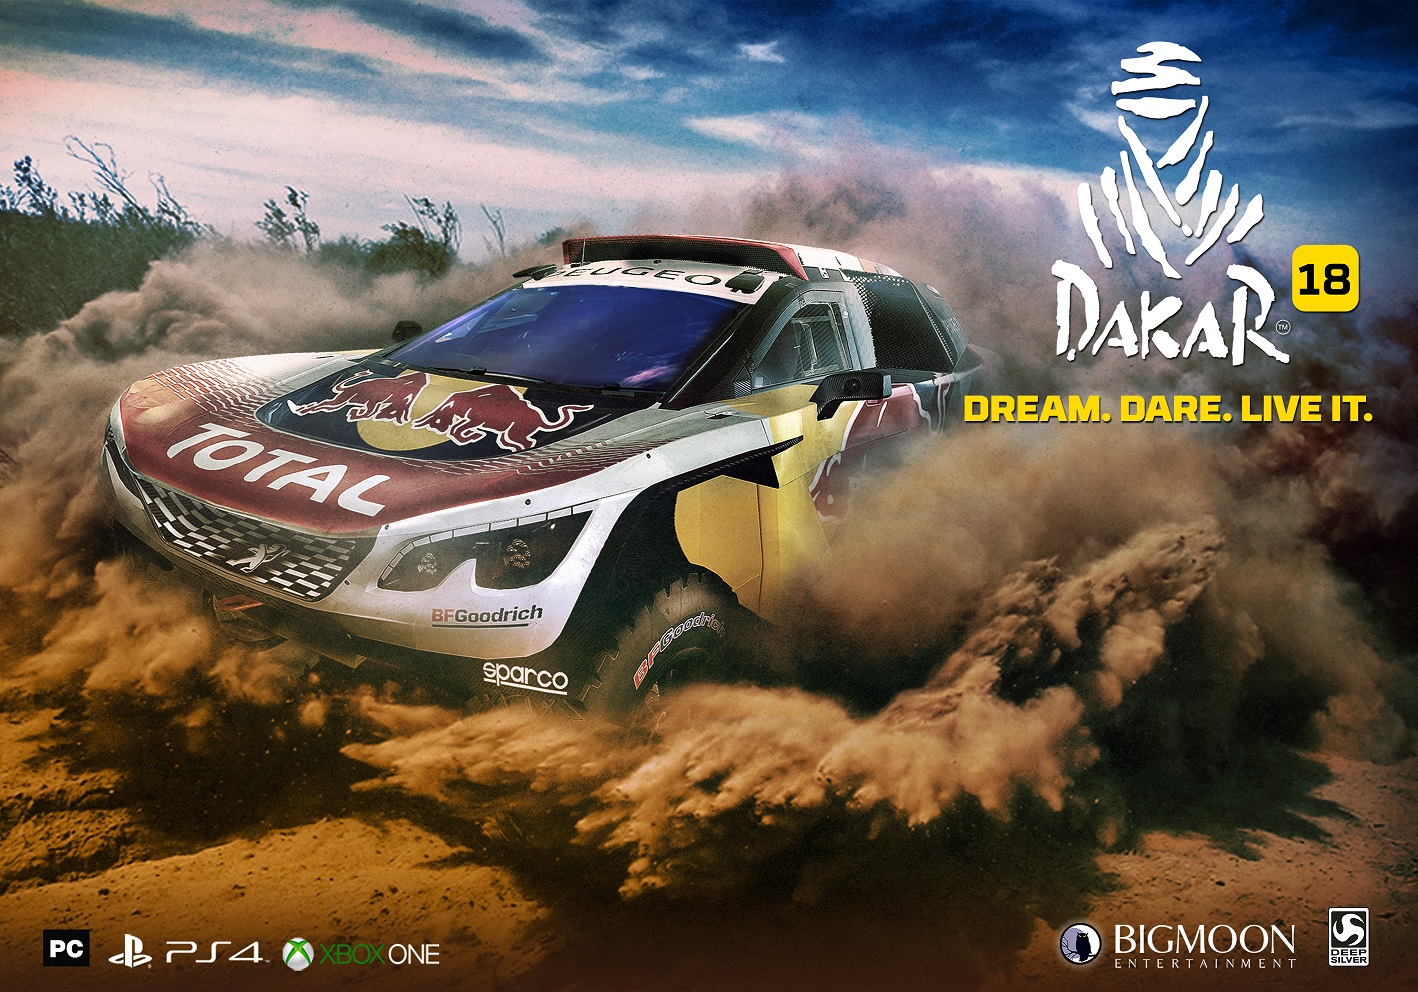 El legendario piloto finlandés Ari Vatanen vuelve a la competición en Dakar 18